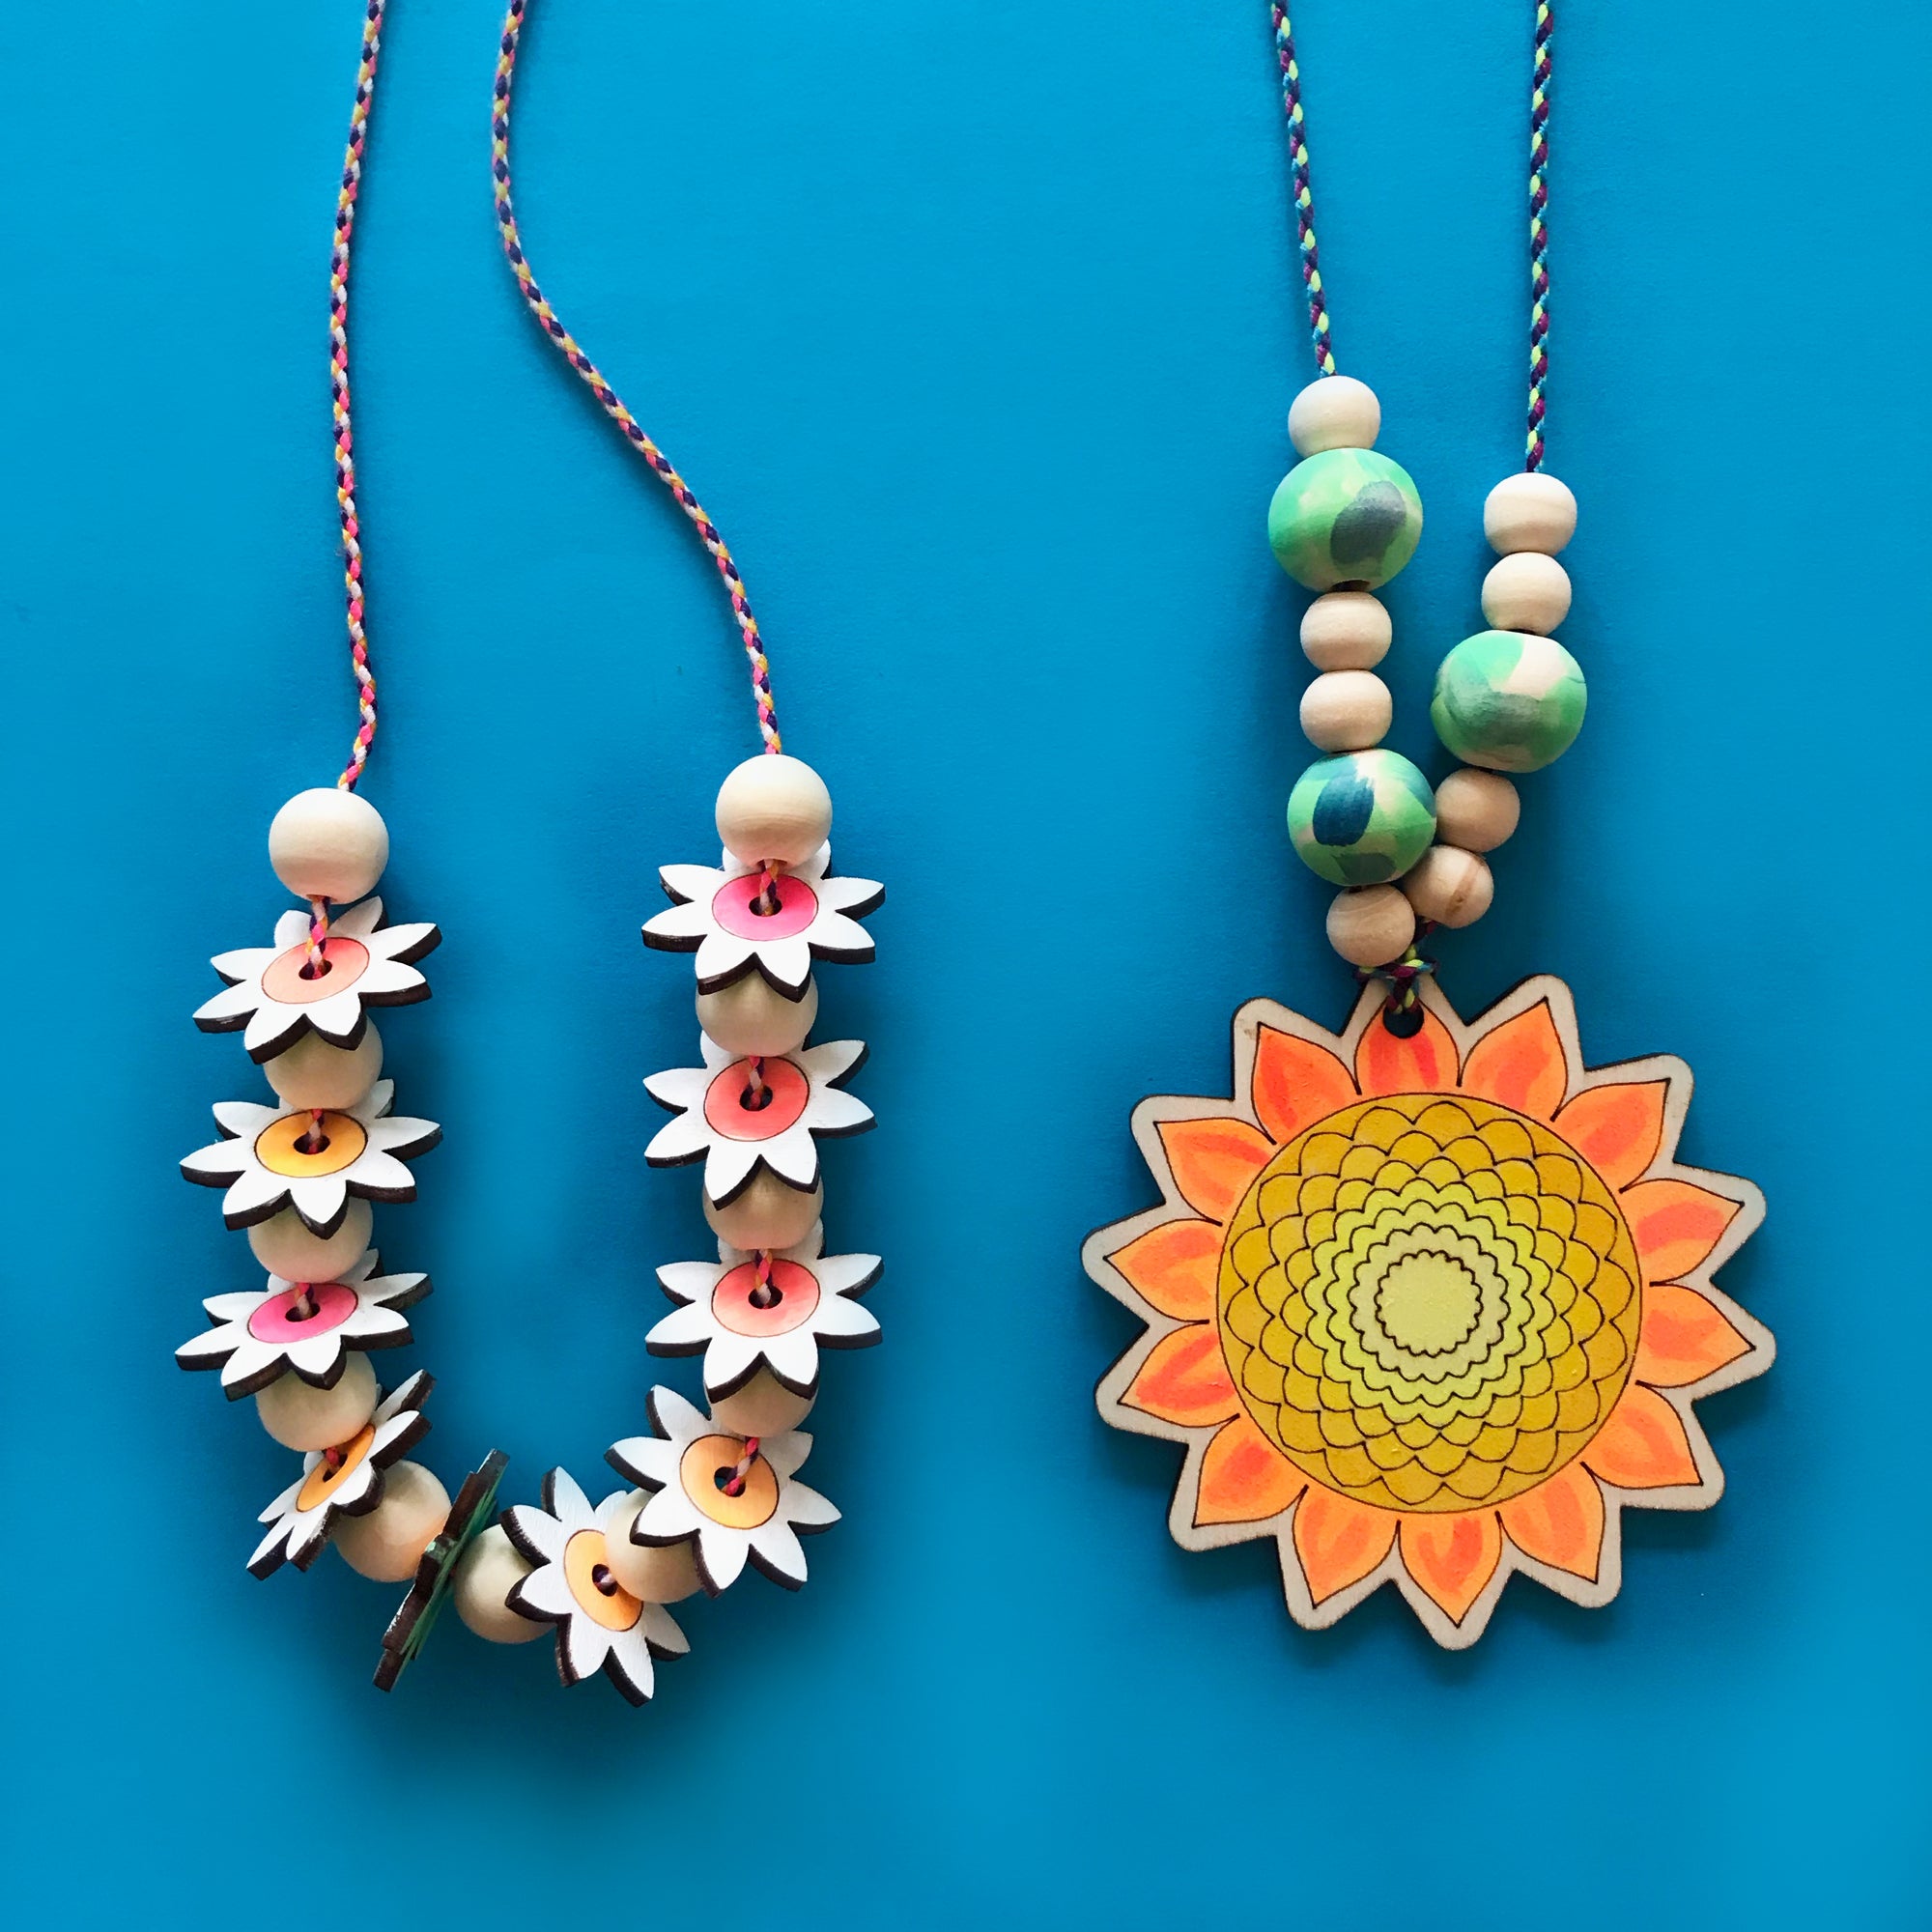 Necklace Craft Kit - Sunflower & Daisies